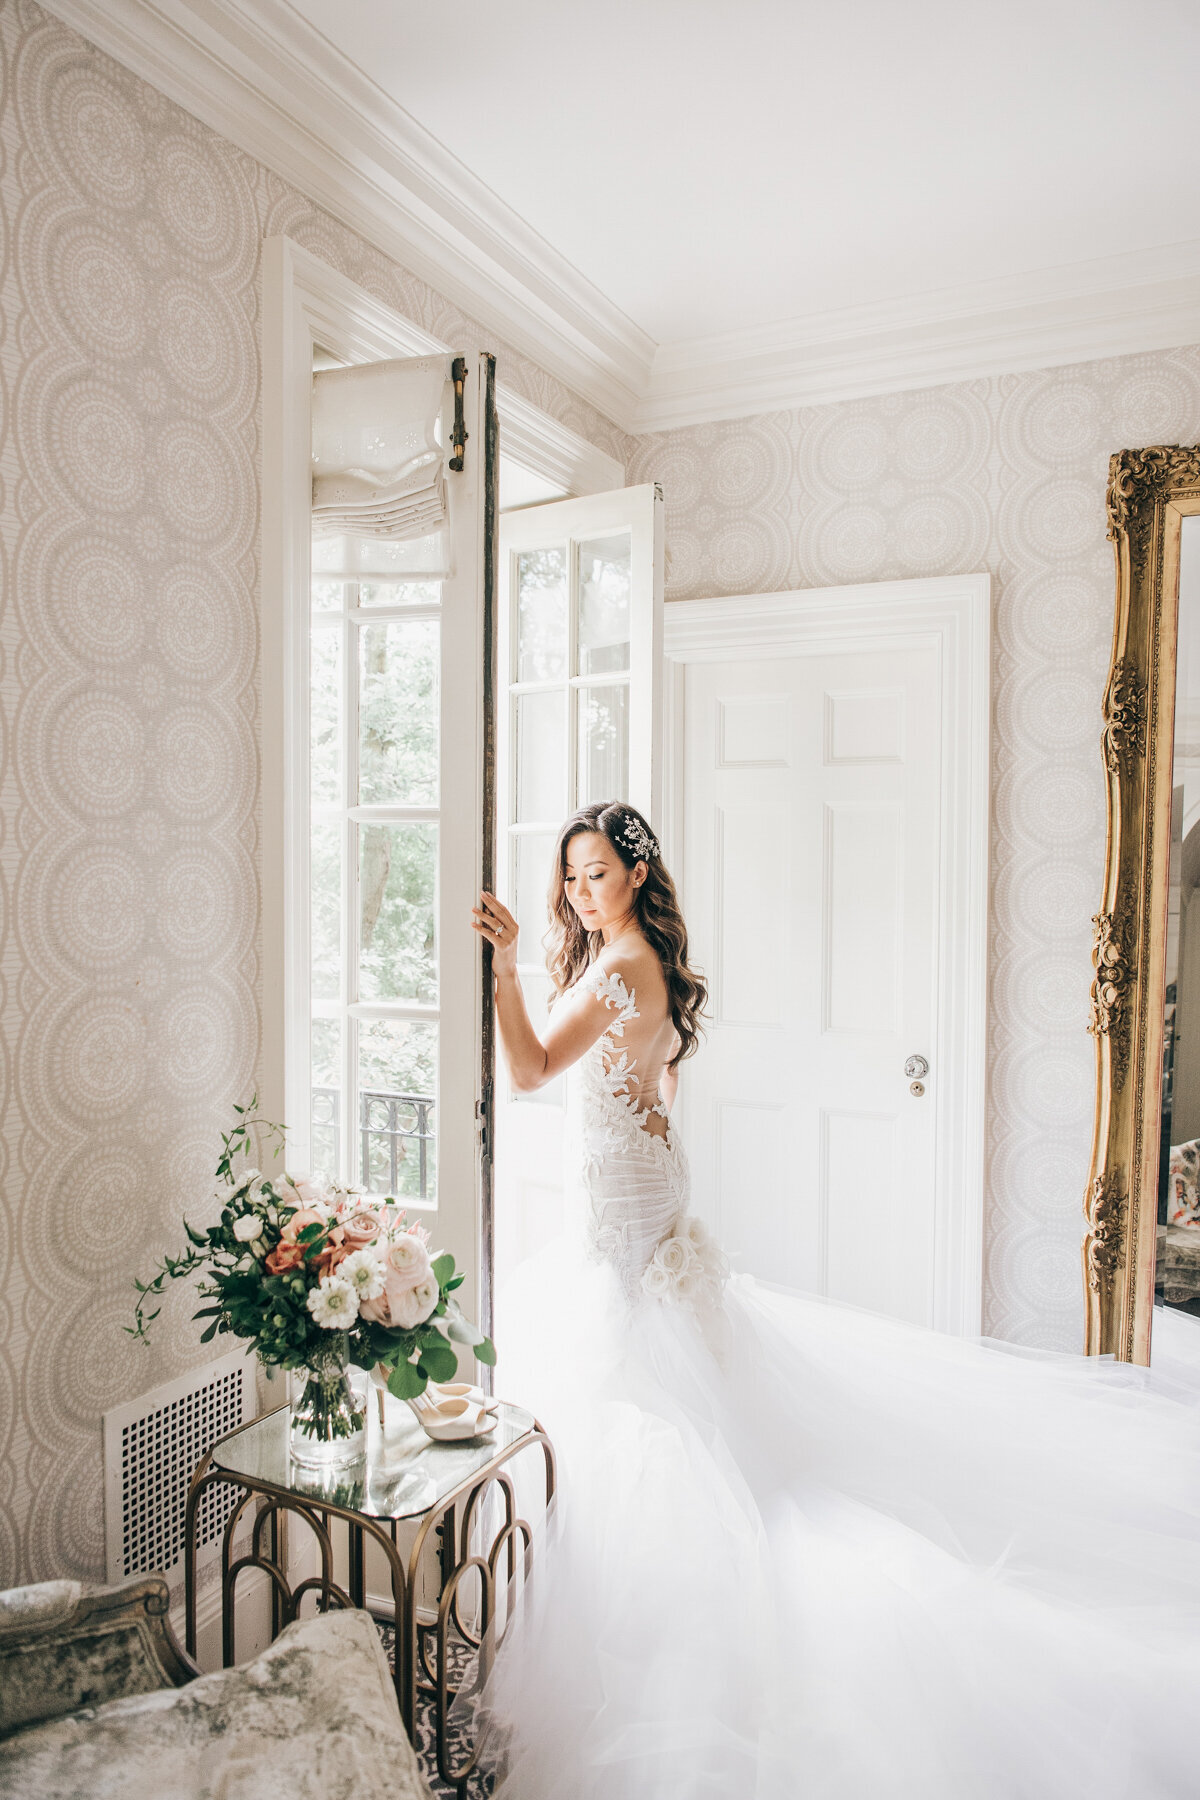 Glamorous portrait of bride opening french doors